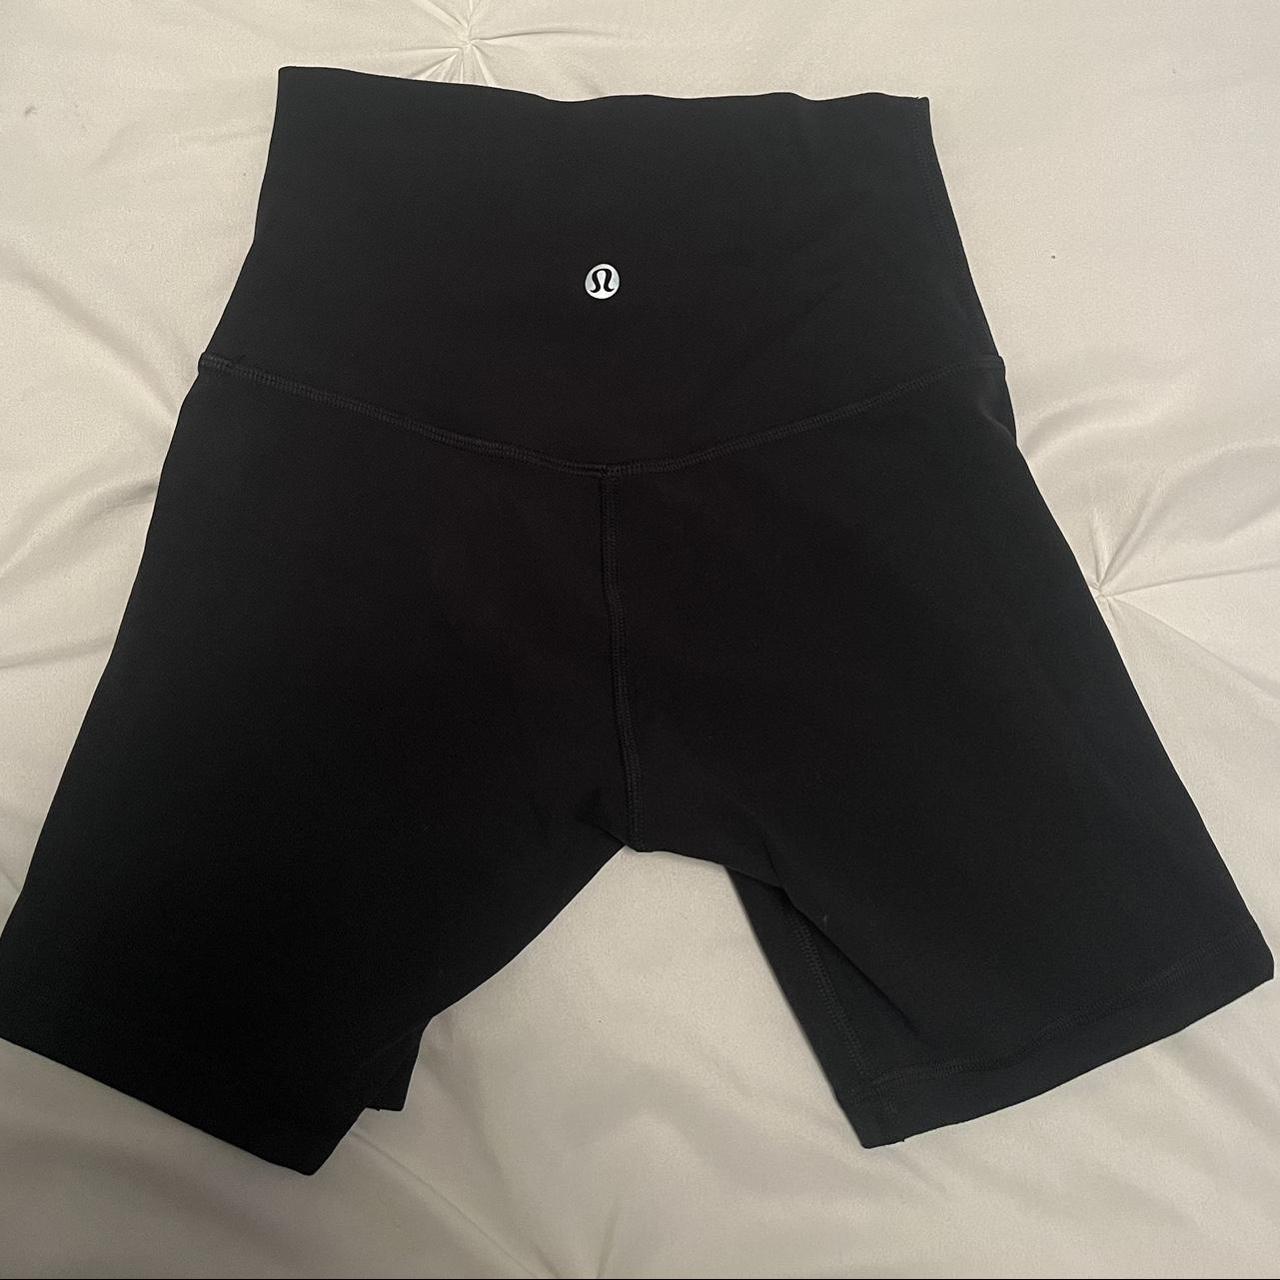 Lululemon Align Shorts 6 Inch 2 pairs for $85 - Depop